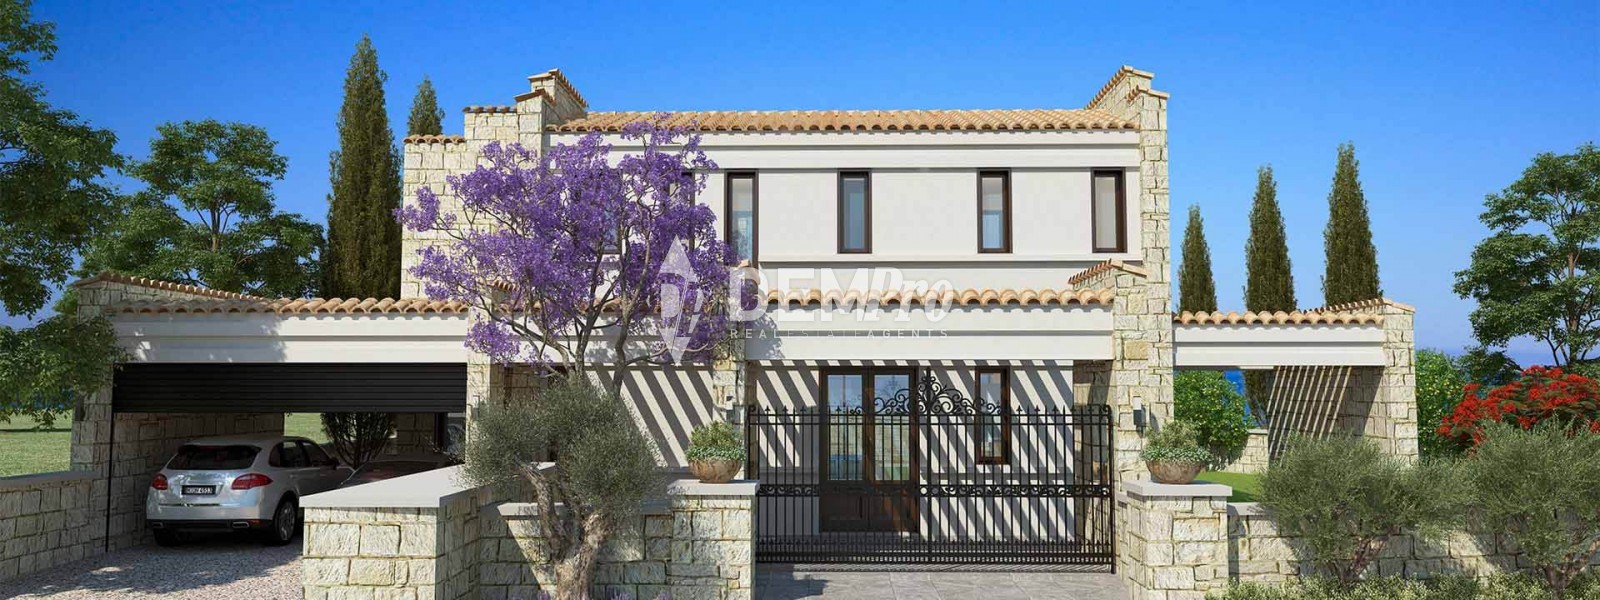 Villa For Sale in Kouklia, Paphos - AD1612